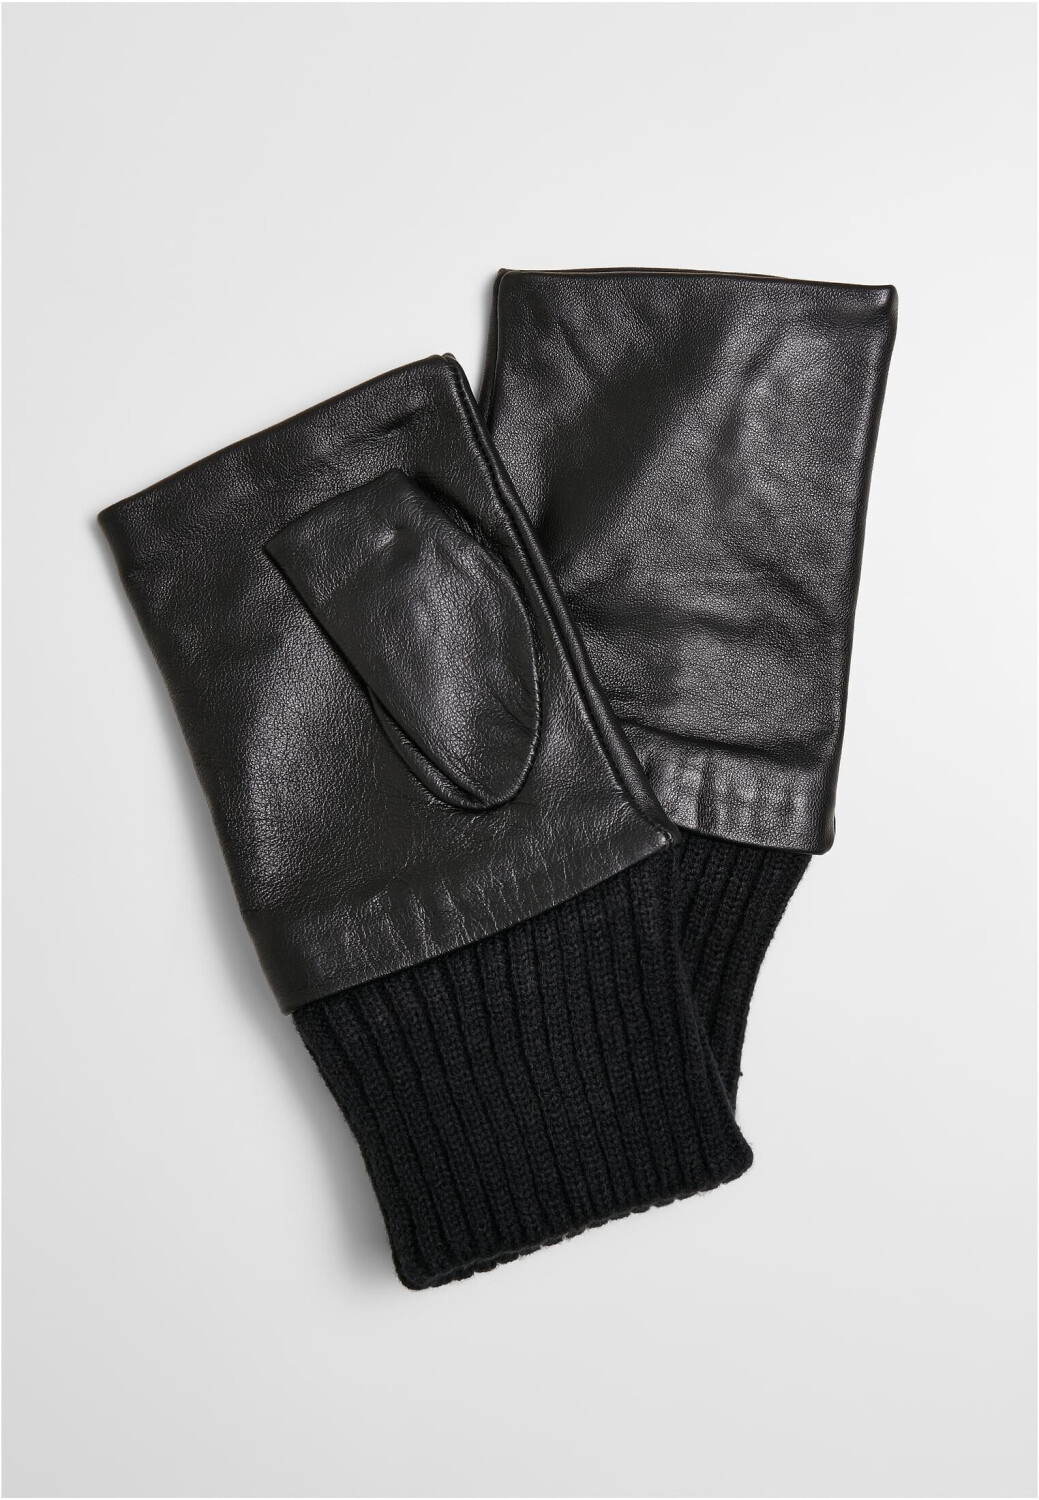 Gloves Synthetic 13,59 Leather Classics bei Urban black (TB4870-00007-0044) Preisvergleich € | Finger ab Half